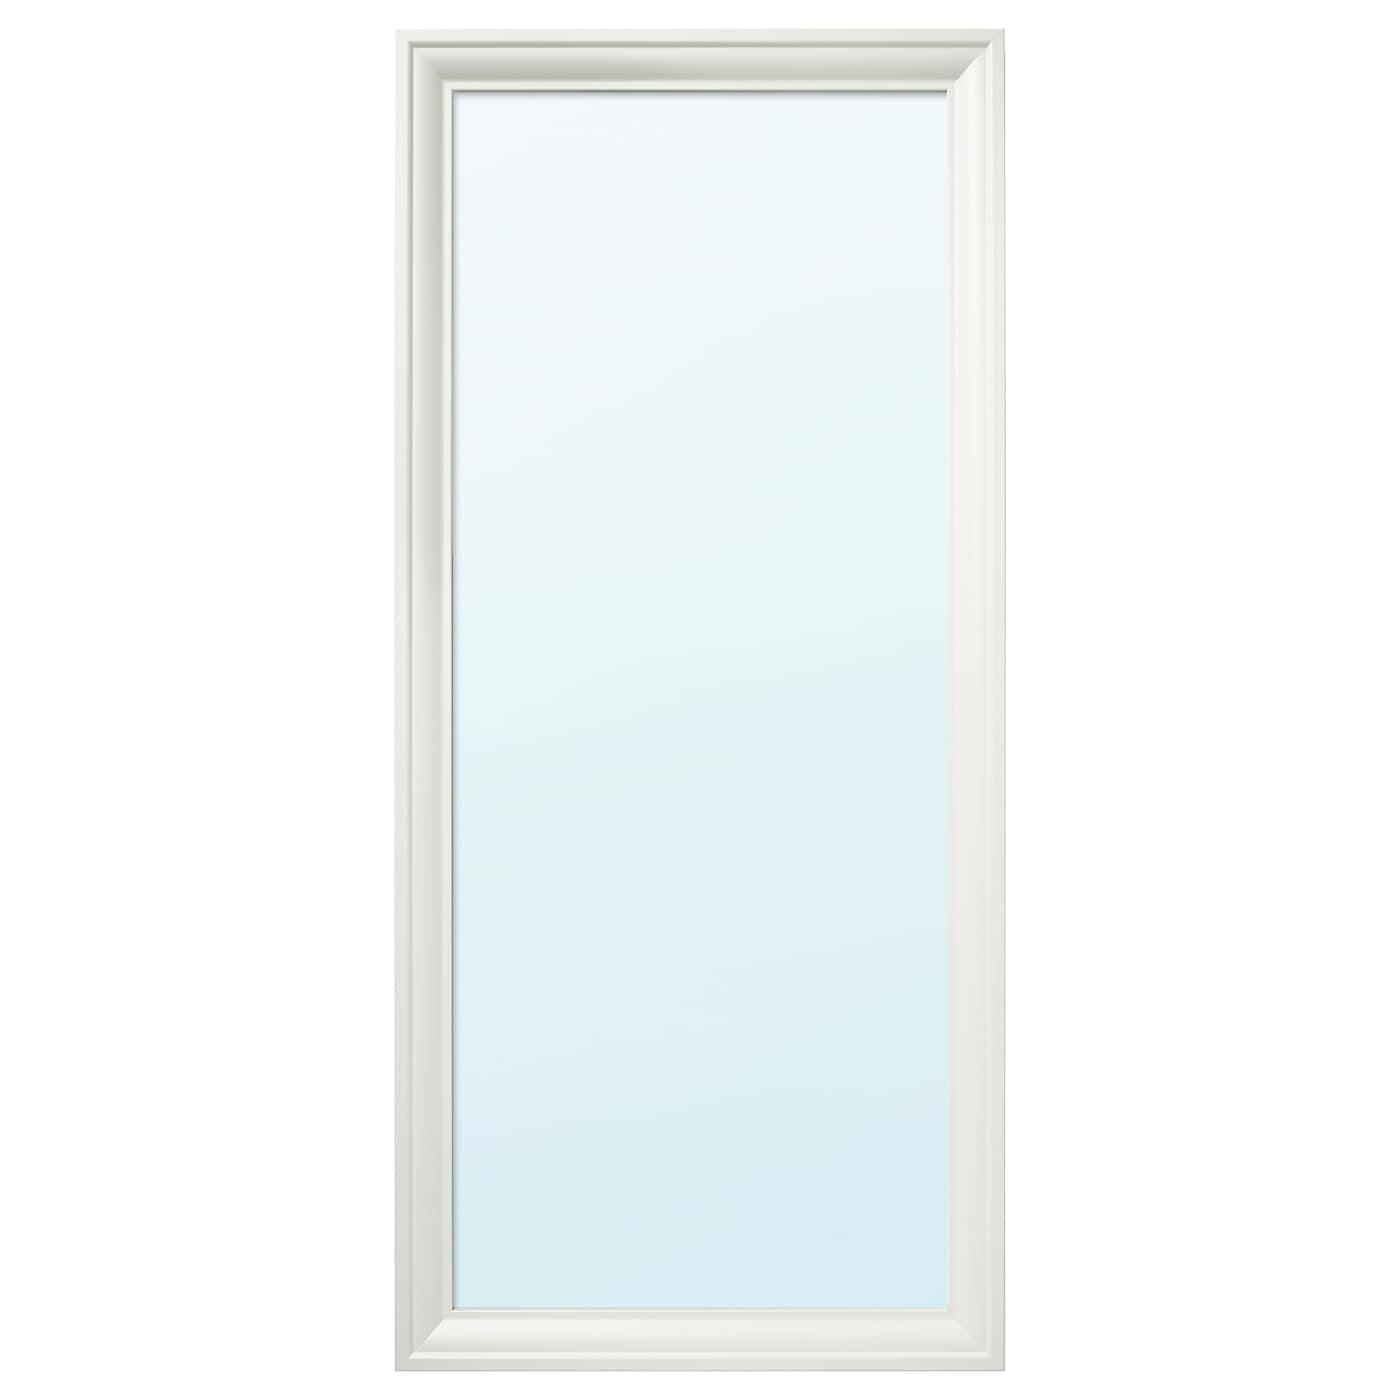 Зеркало - TOFTBYN IKEA/ ТОФТБЮН ИКЕА, 75х165 см,  белый